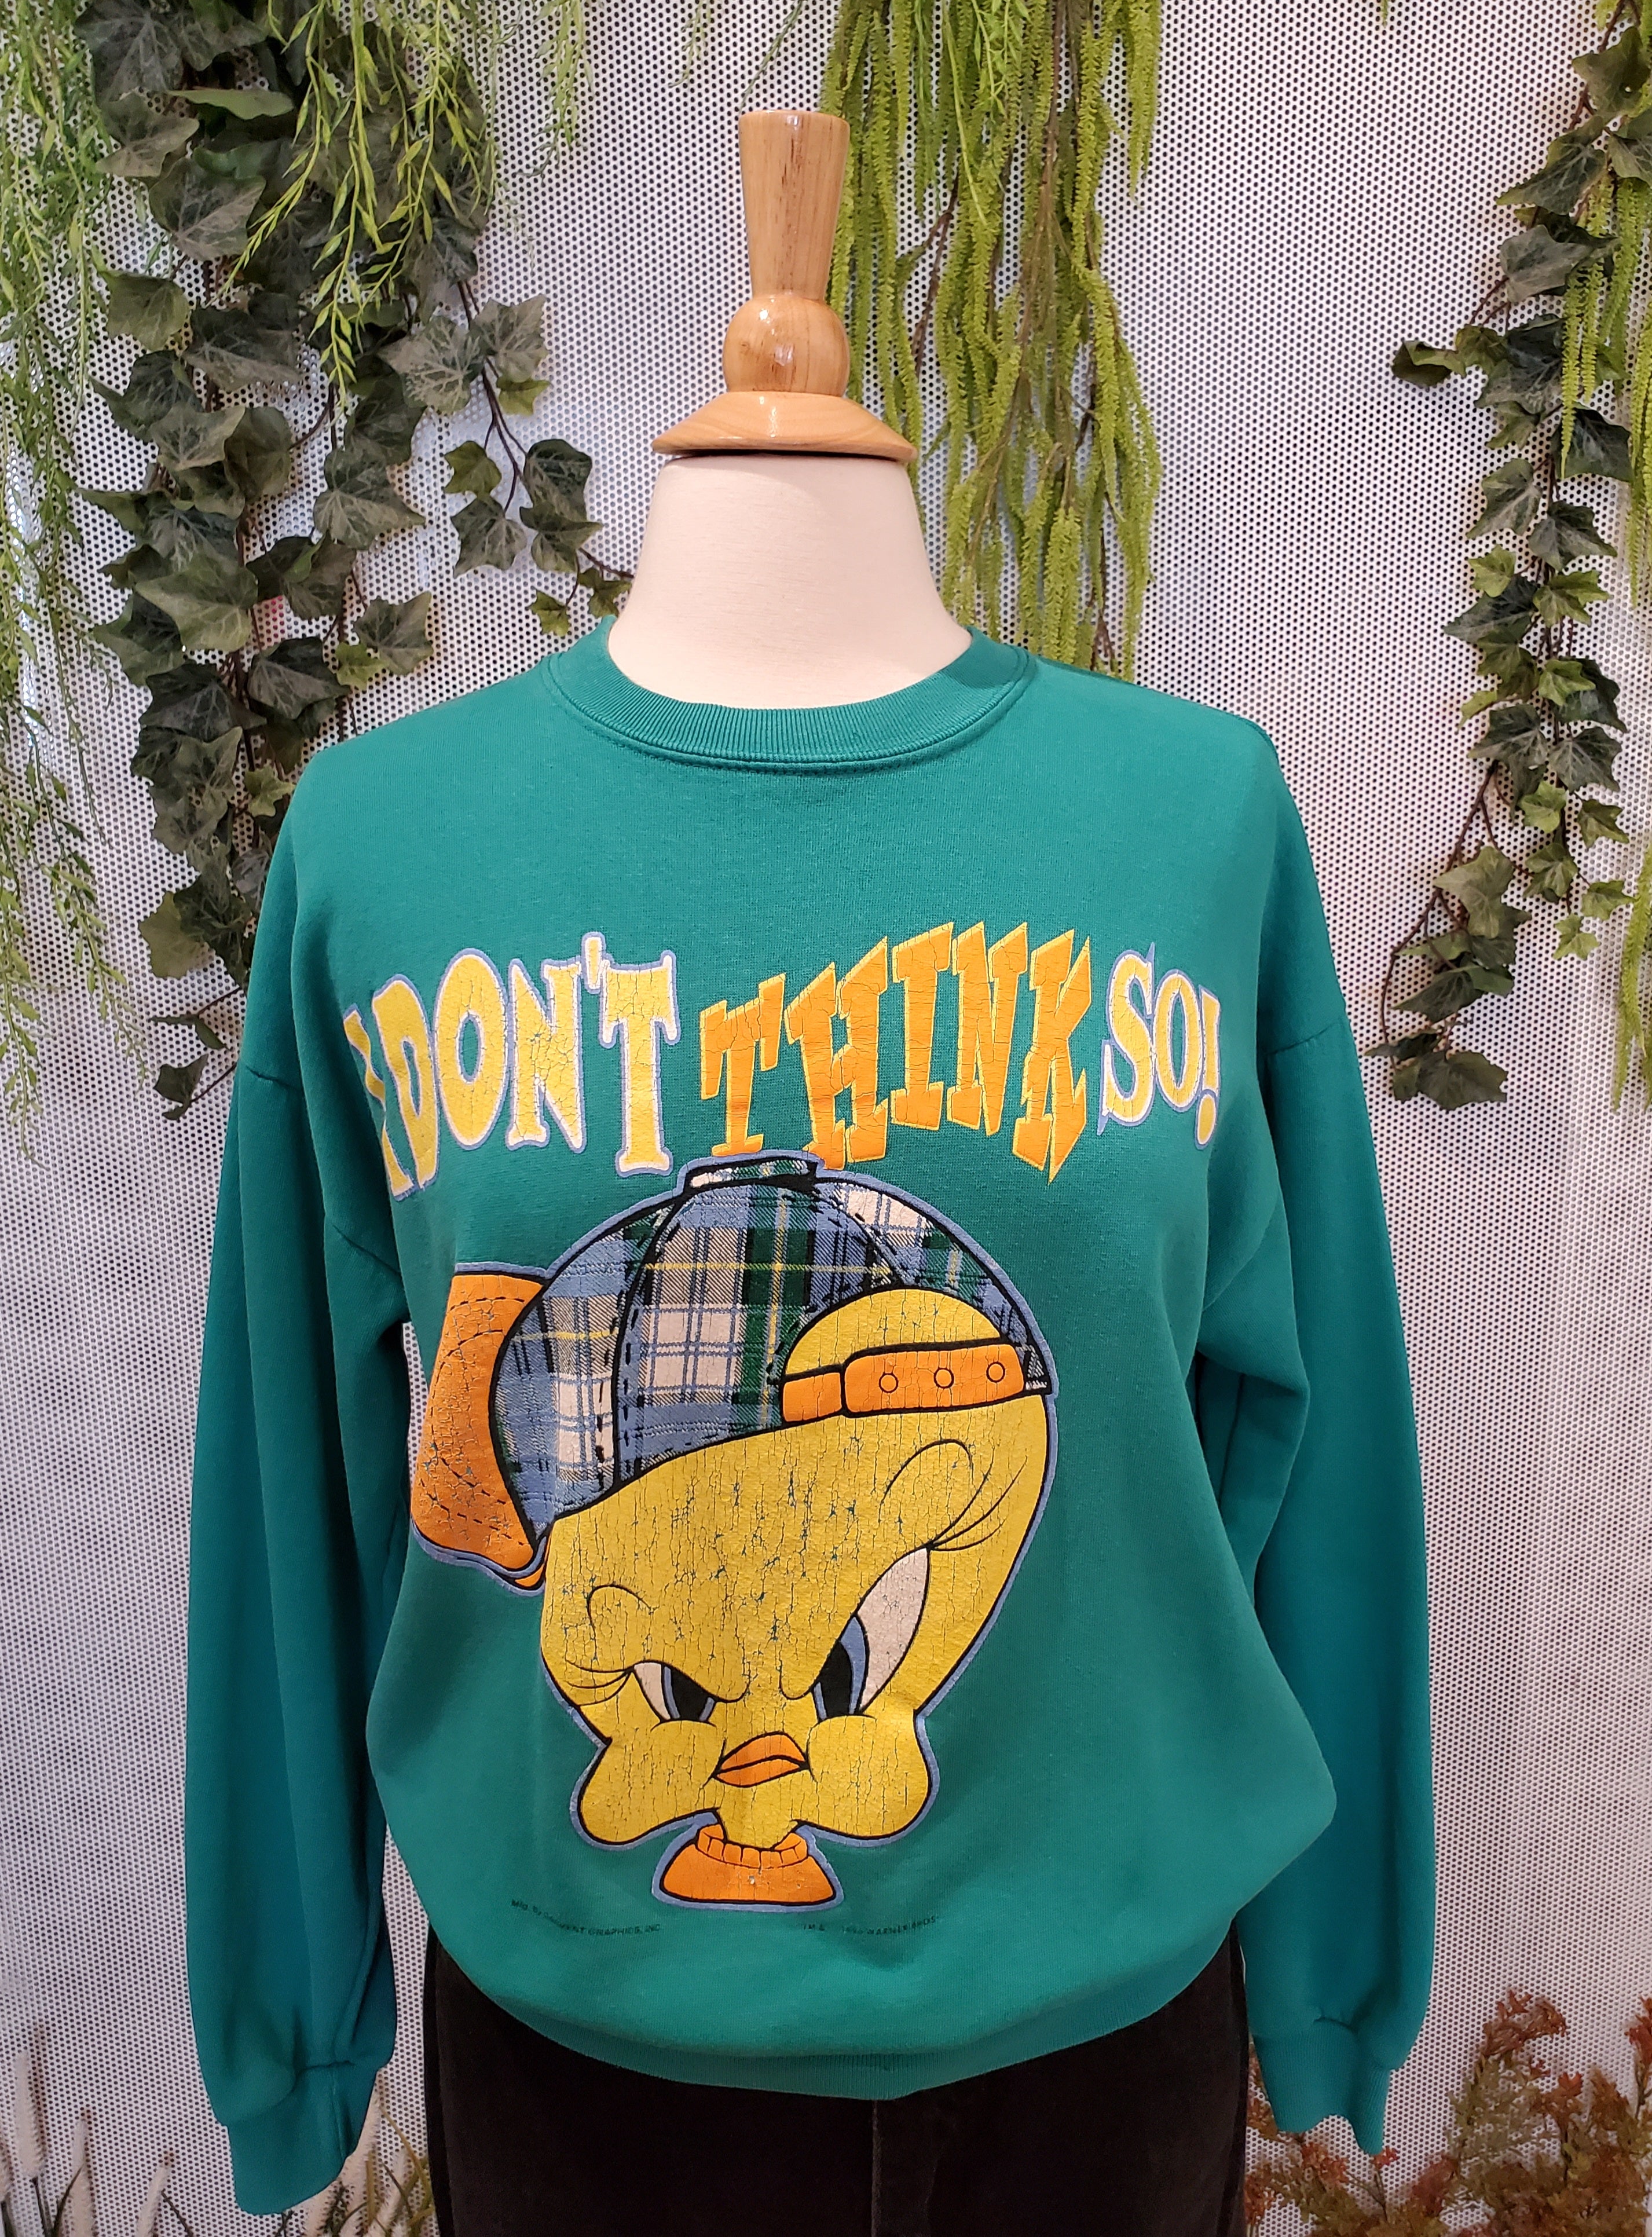 1996 Looney Tunes Sweatshirt